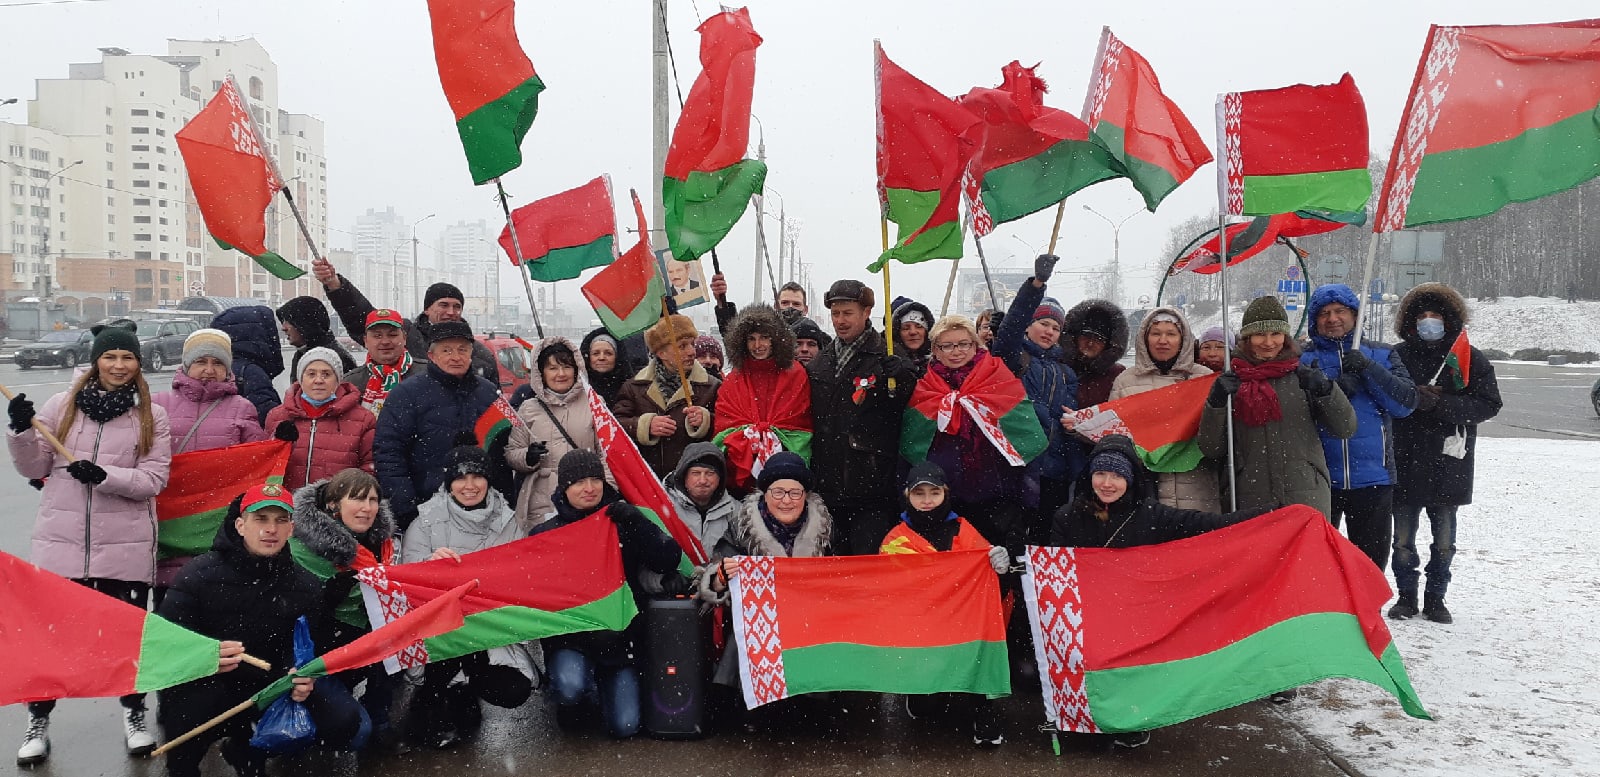 Пробеги за Лукашенко, “ябатькинги”, пикеты у посольств — везде одни и те же люди